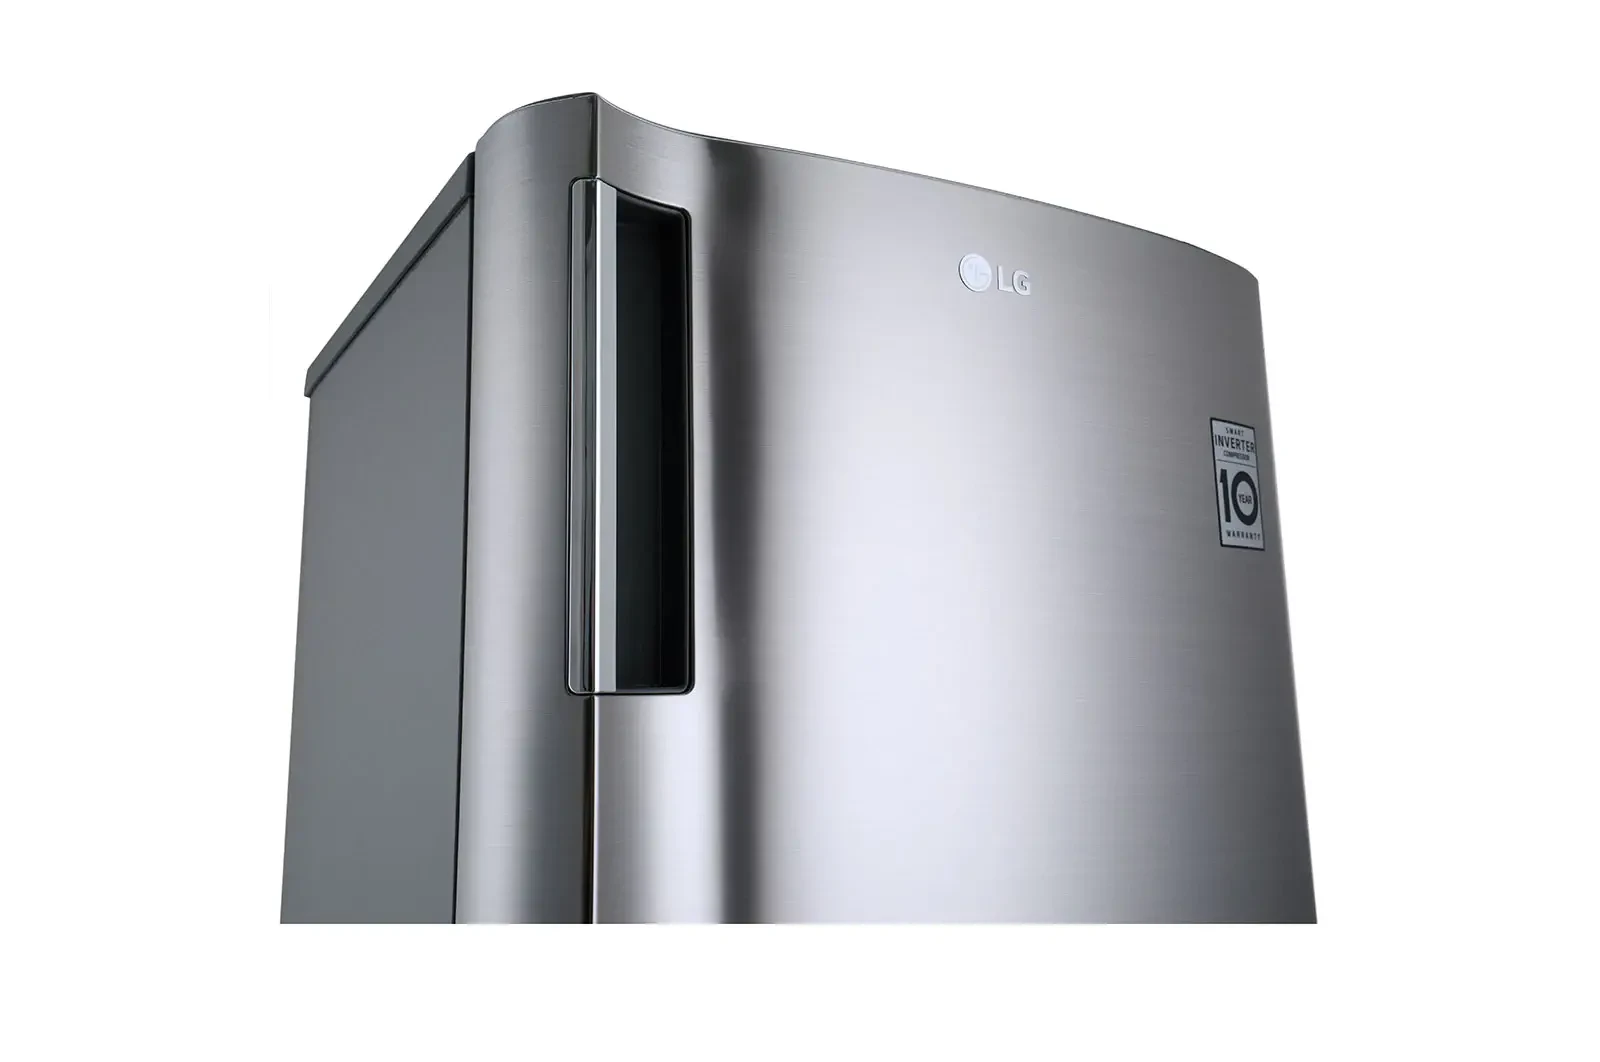 LG GN-304SL 168L Standing Freezer